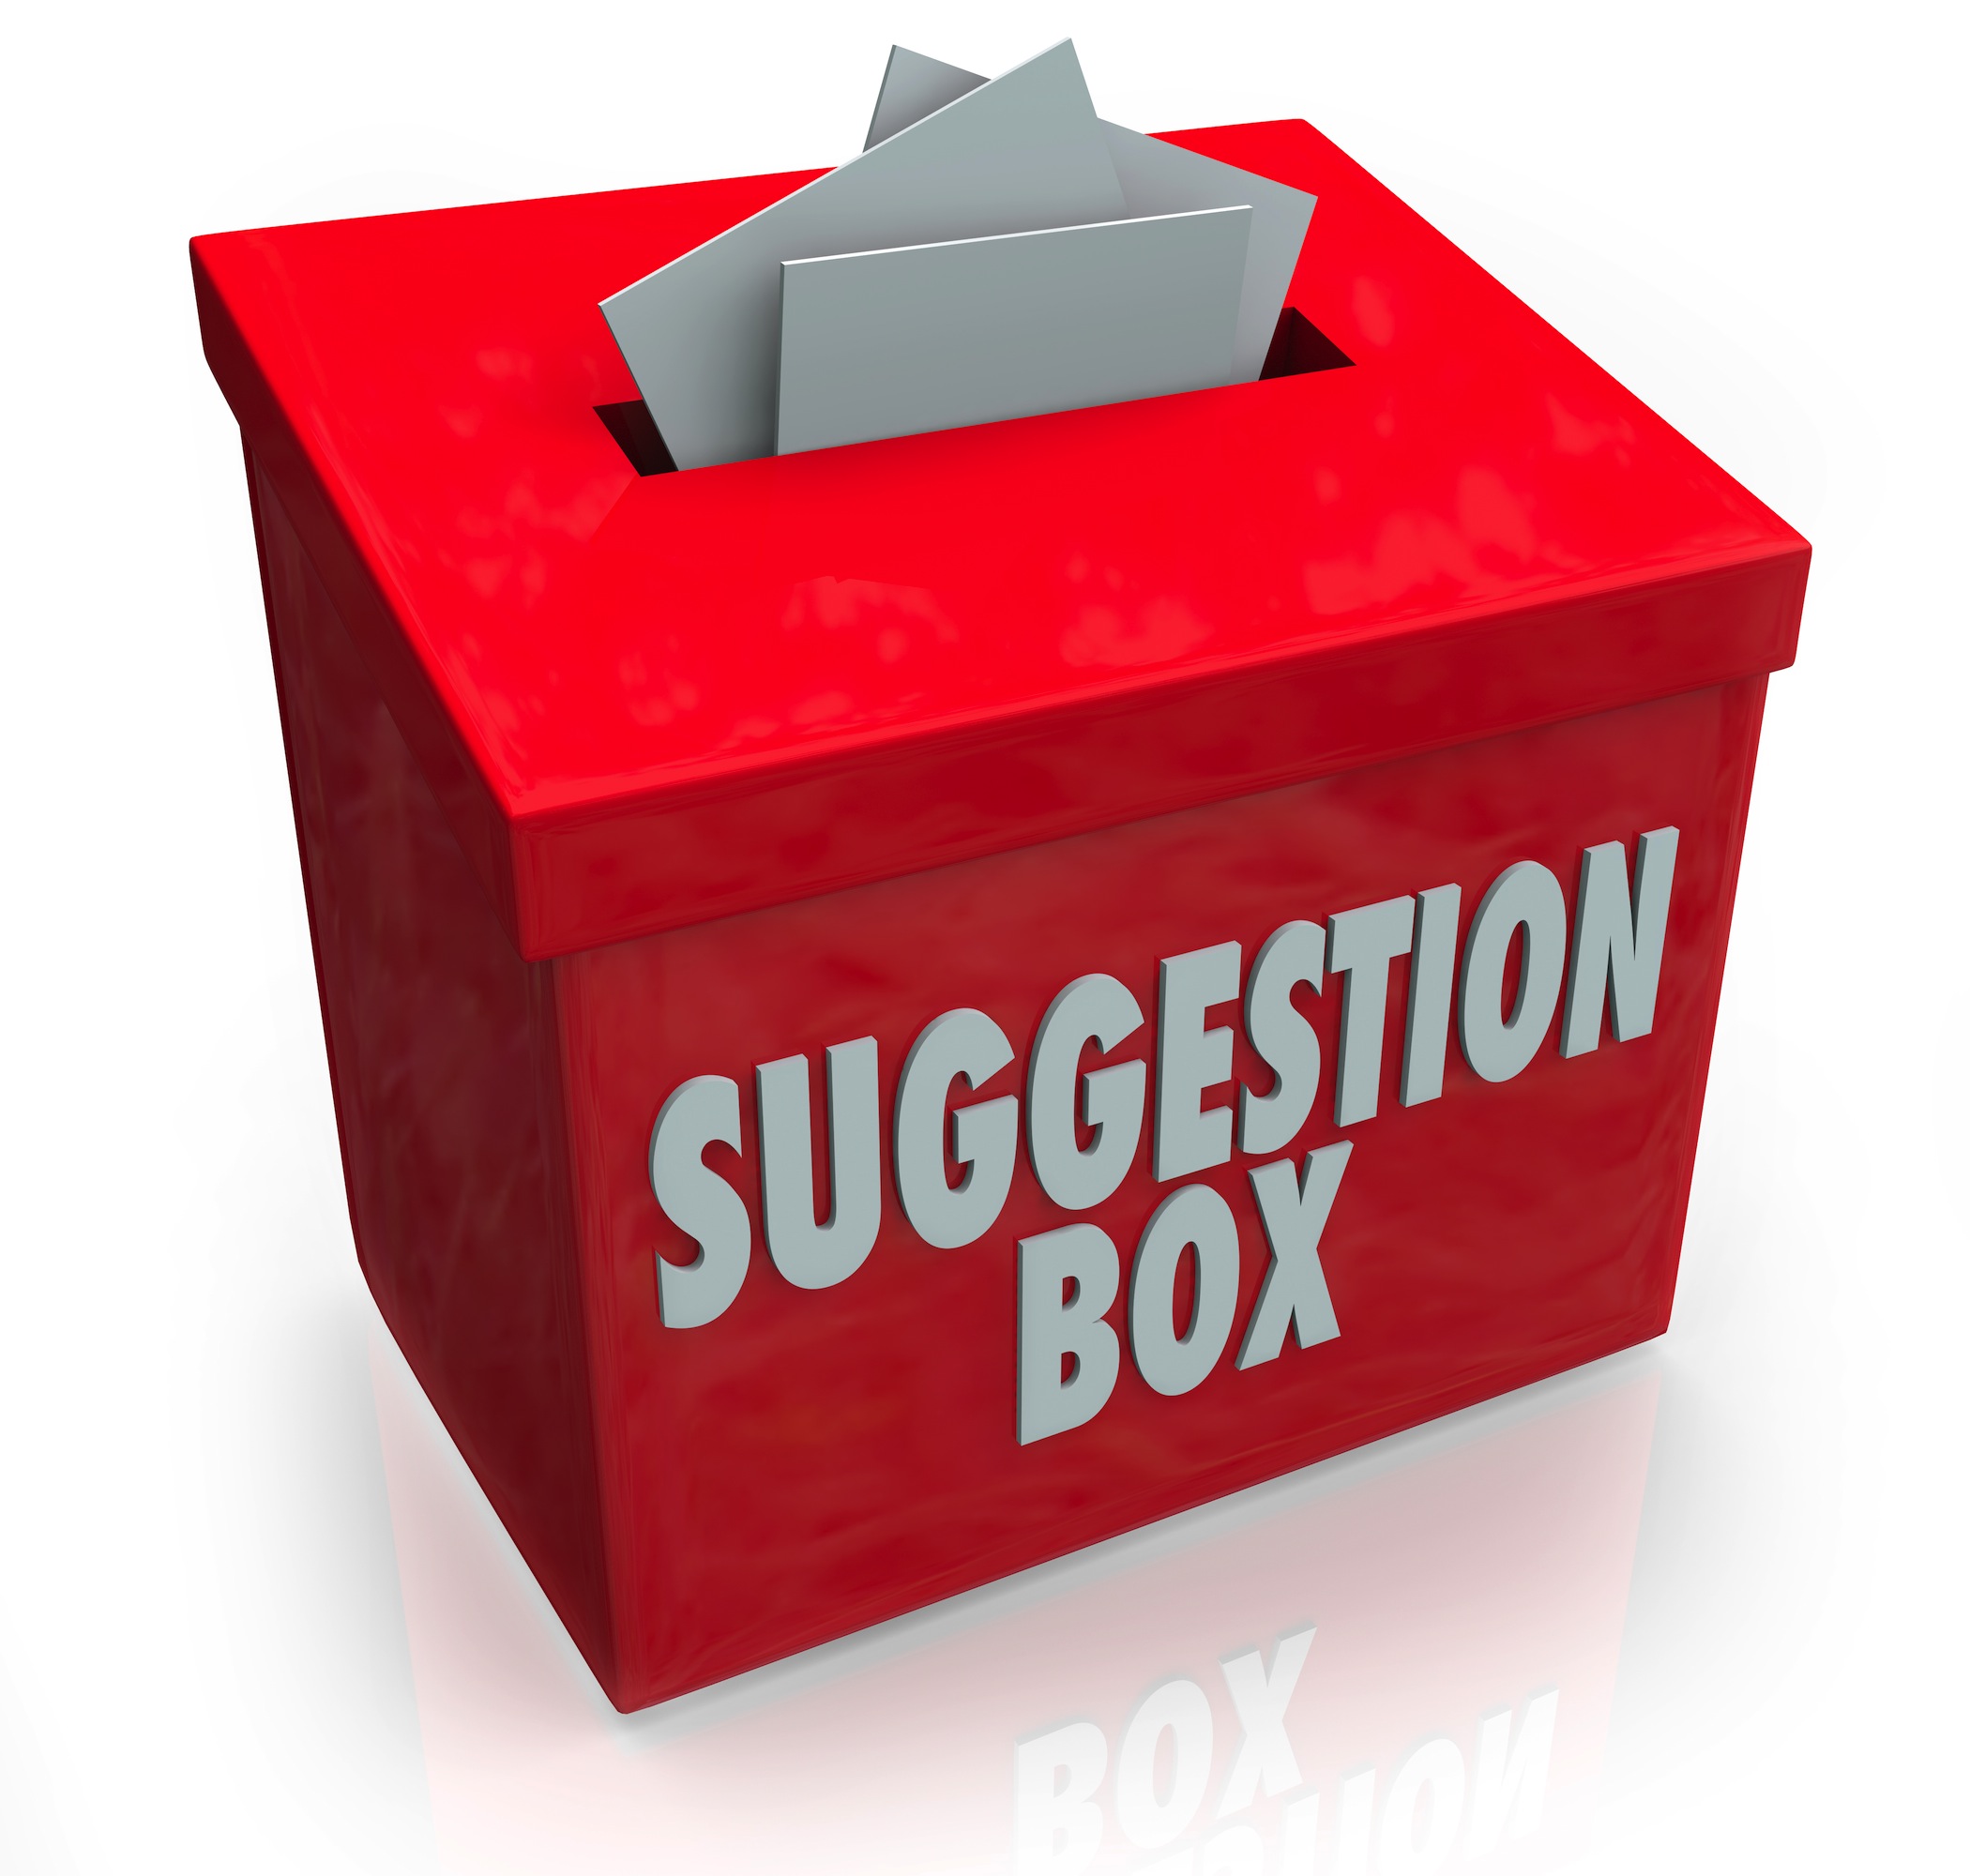 Suggestion Box